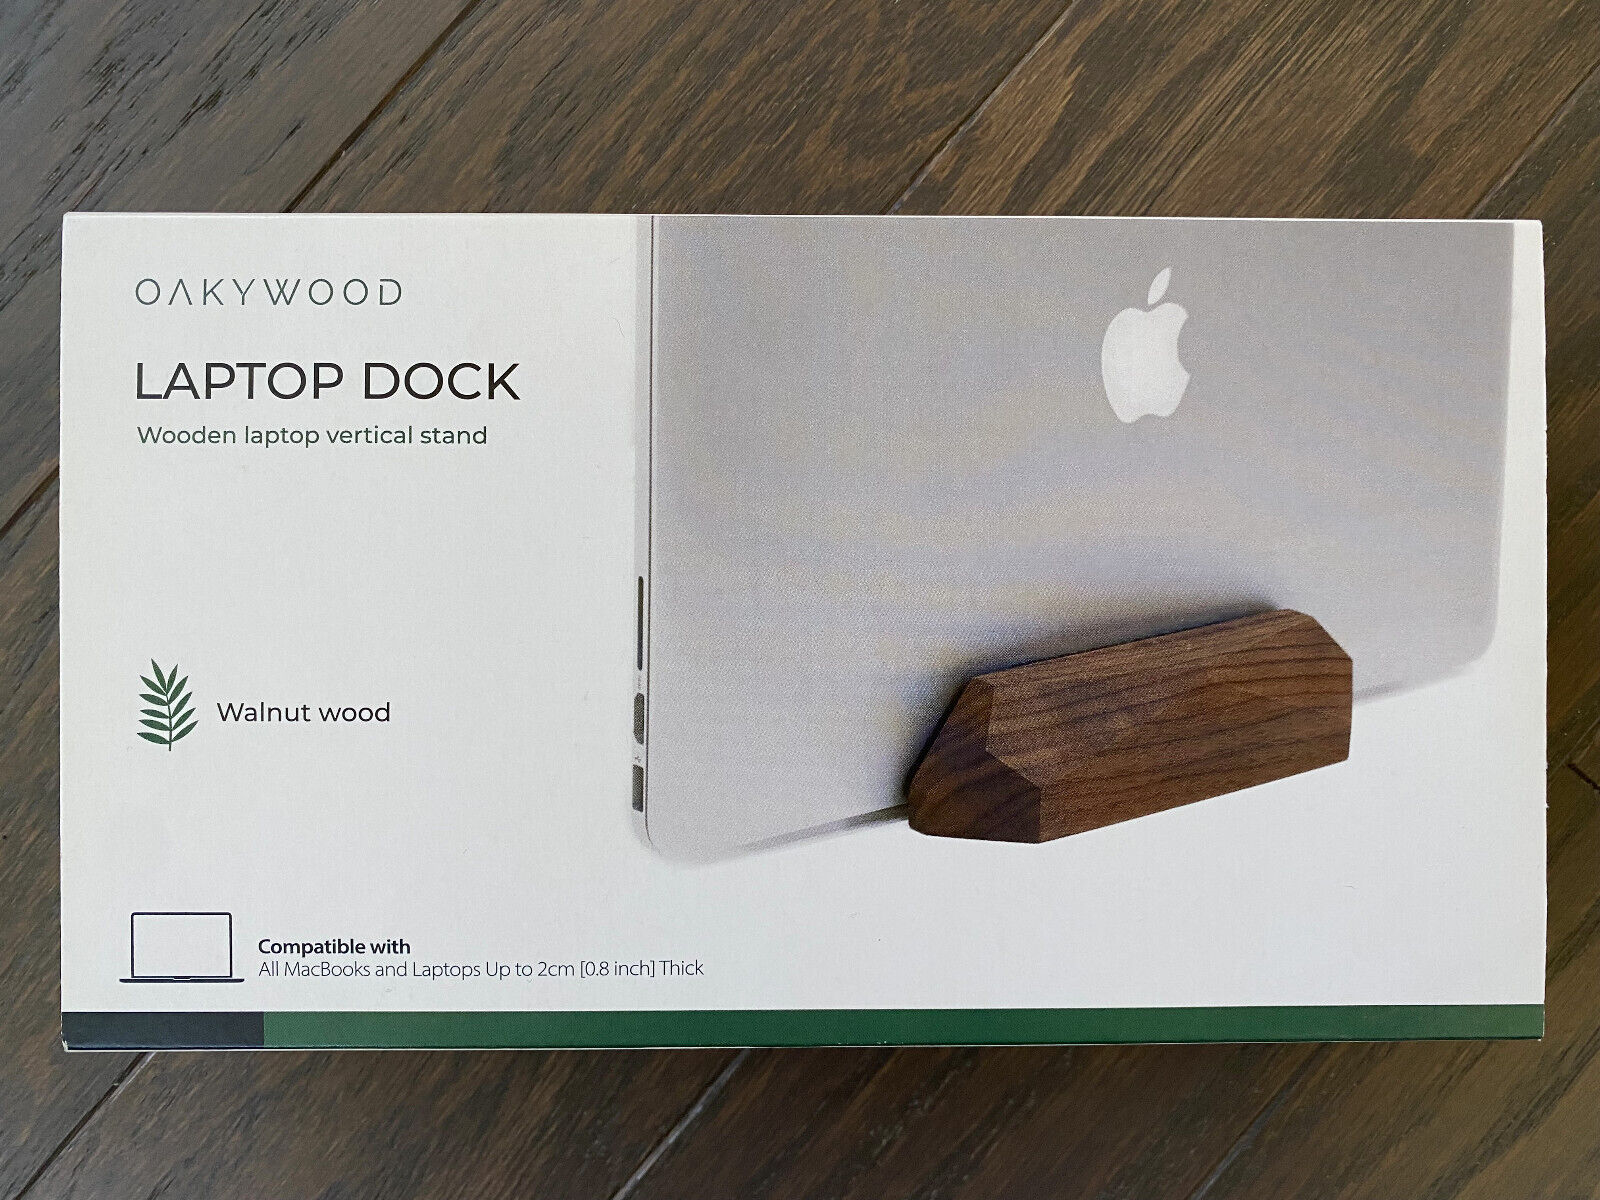 Oakywood Laptop Dock - Wooden Vertical Stand - Walnut